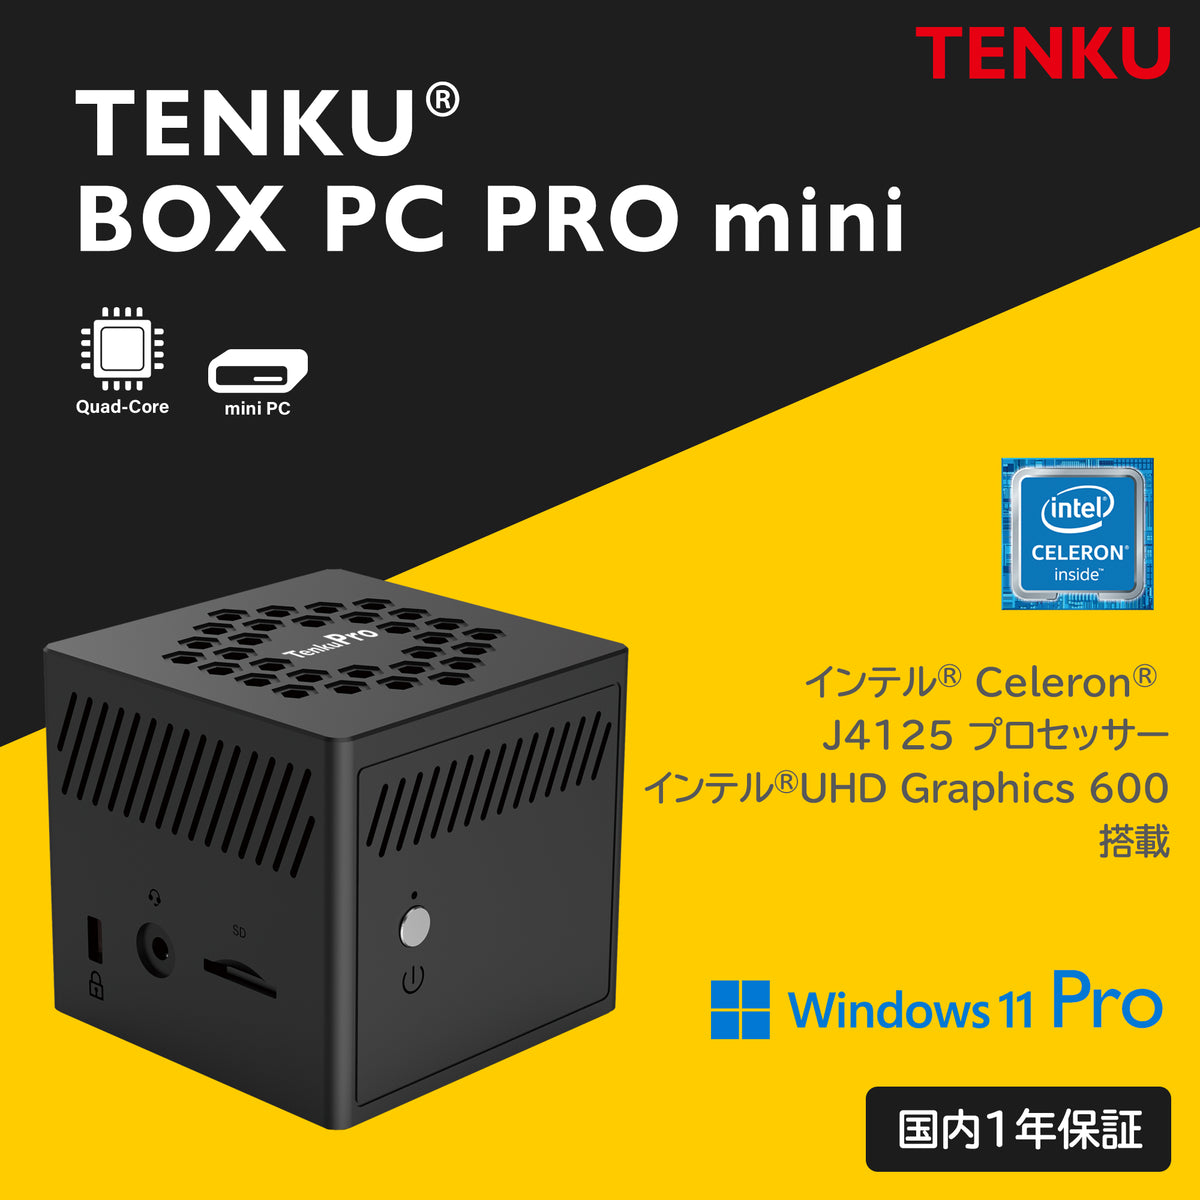 TENKU BOX PC PRO mini版 CoreJ4125